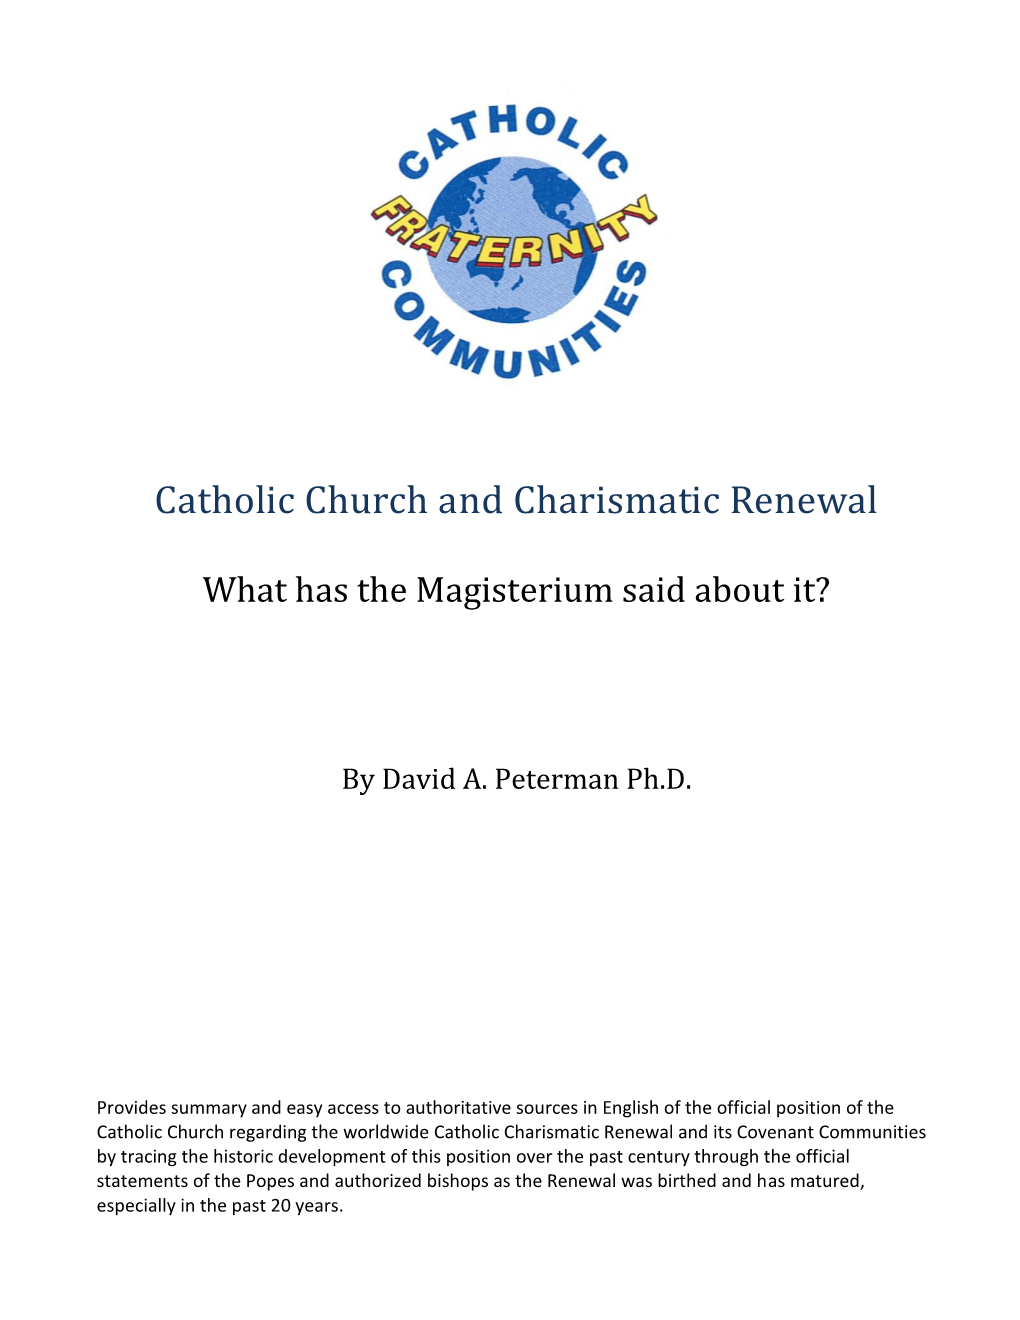 Catholic Church Affirms Charismatic Renewal